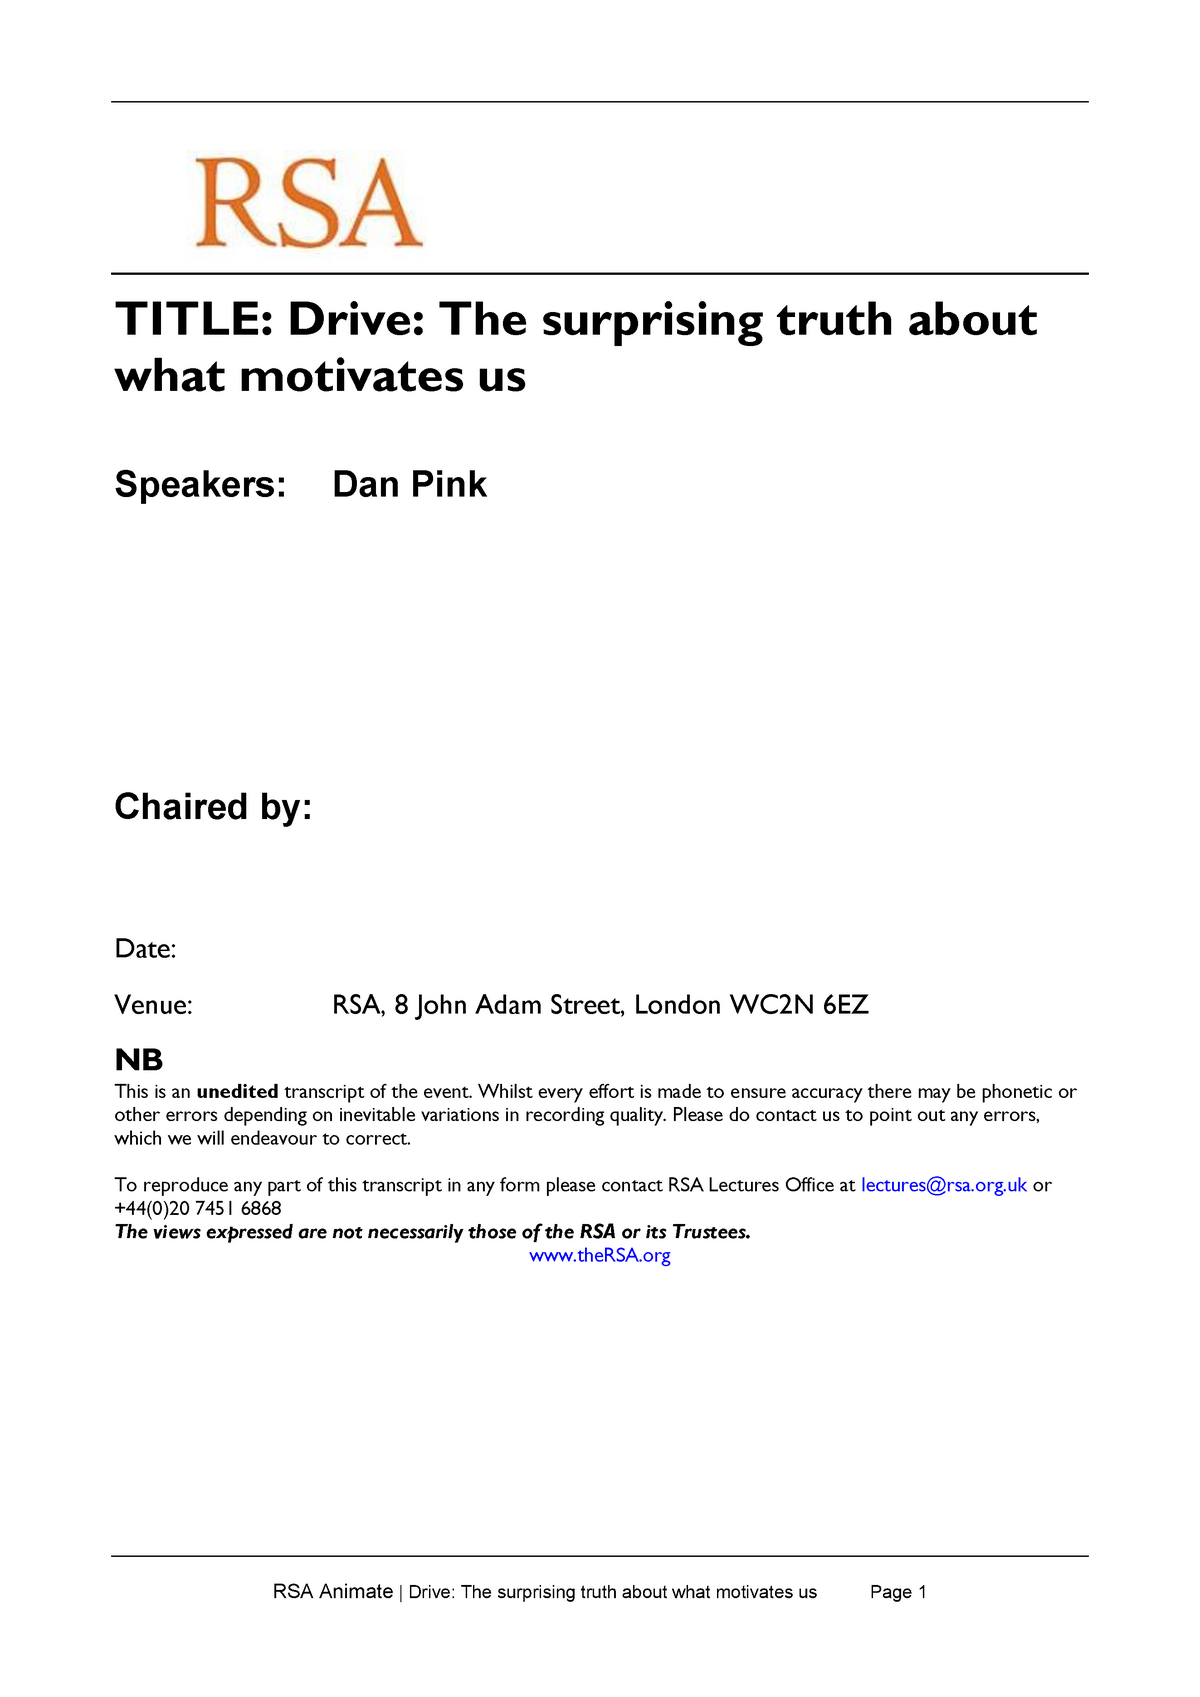 Rsa lecture dan pink transcript - TITLE: Drive: The surprising truth about  what motivates us - Studocu